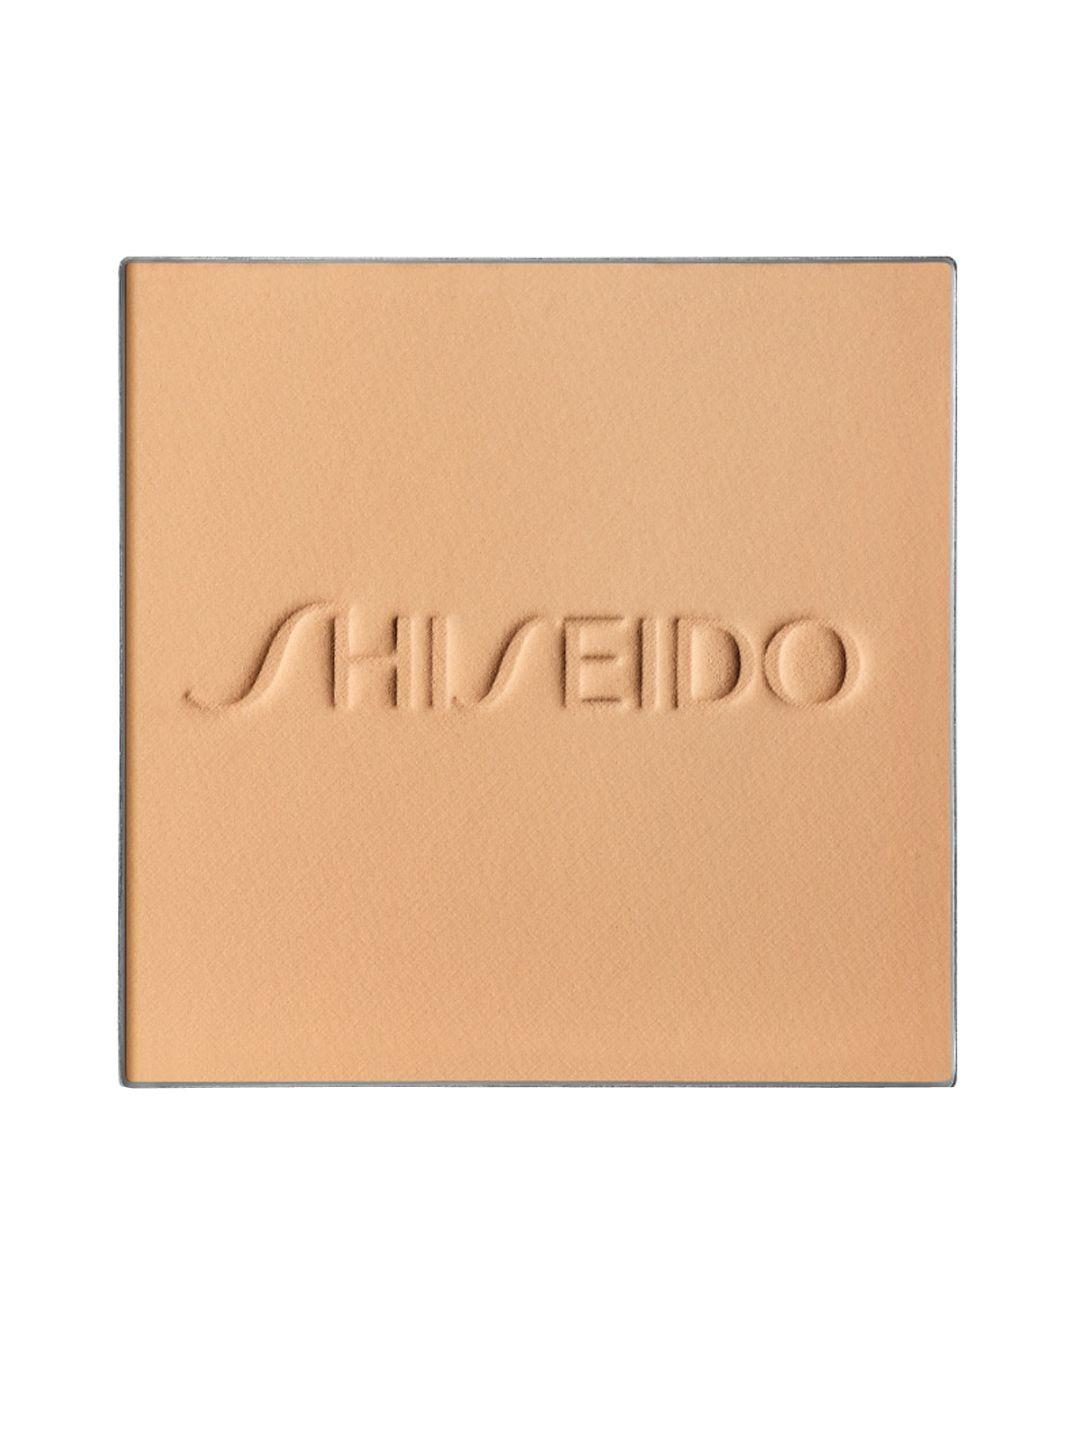 shiseido syncro skin self refreshing custom finish powder foundation 160 shell - 9 g